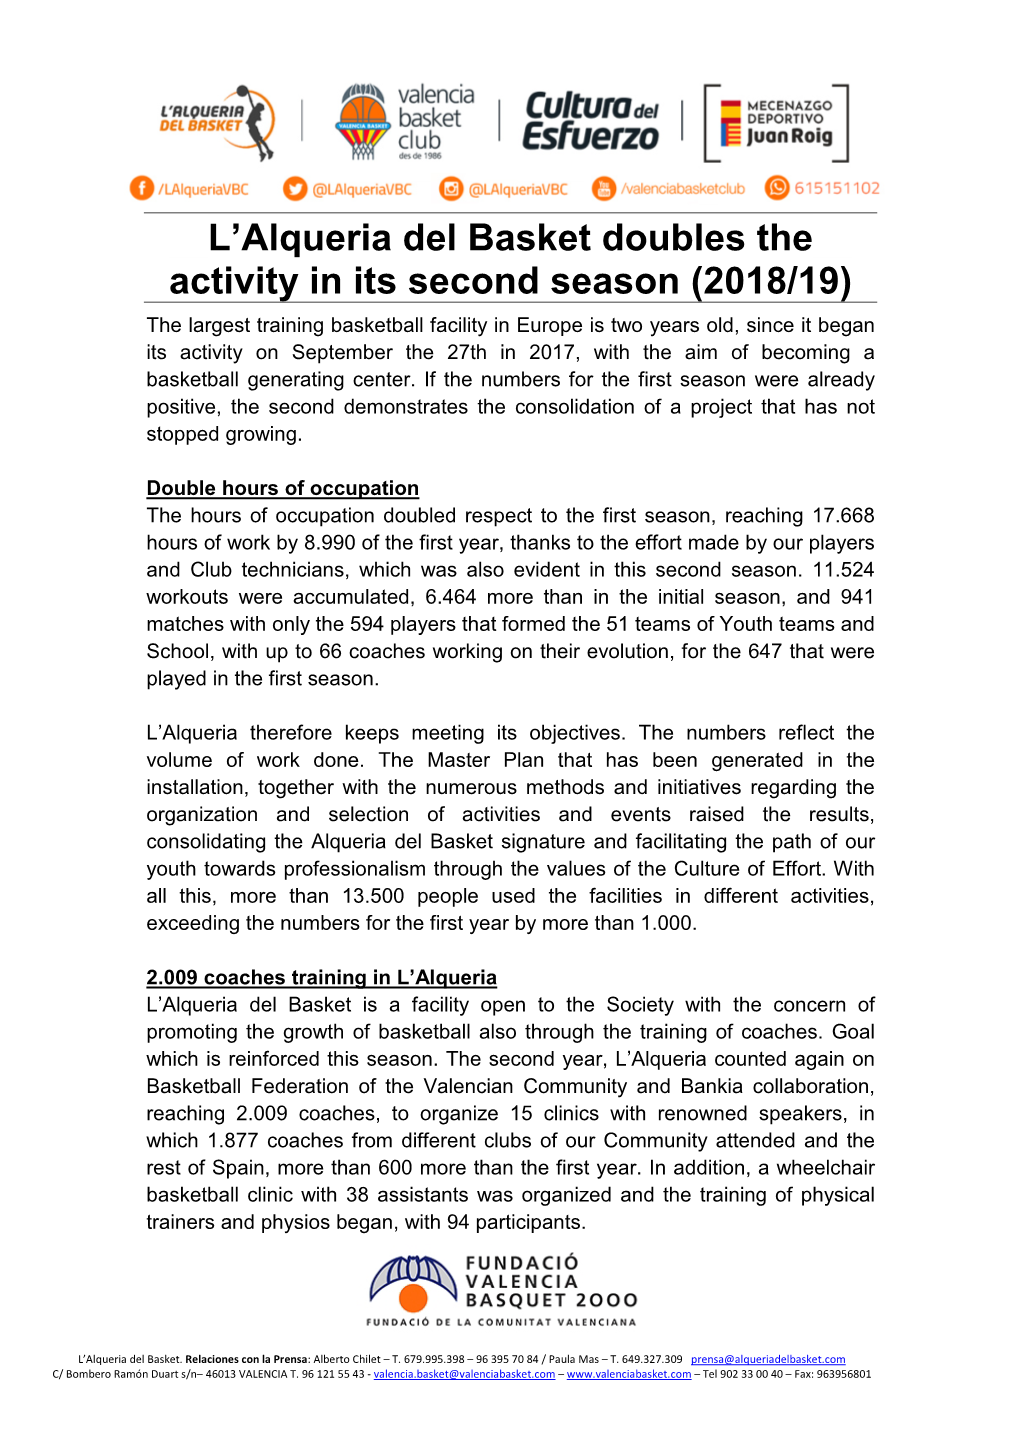 L'alqueria Del Basket Doubles the Activity in Its Second Season (2018